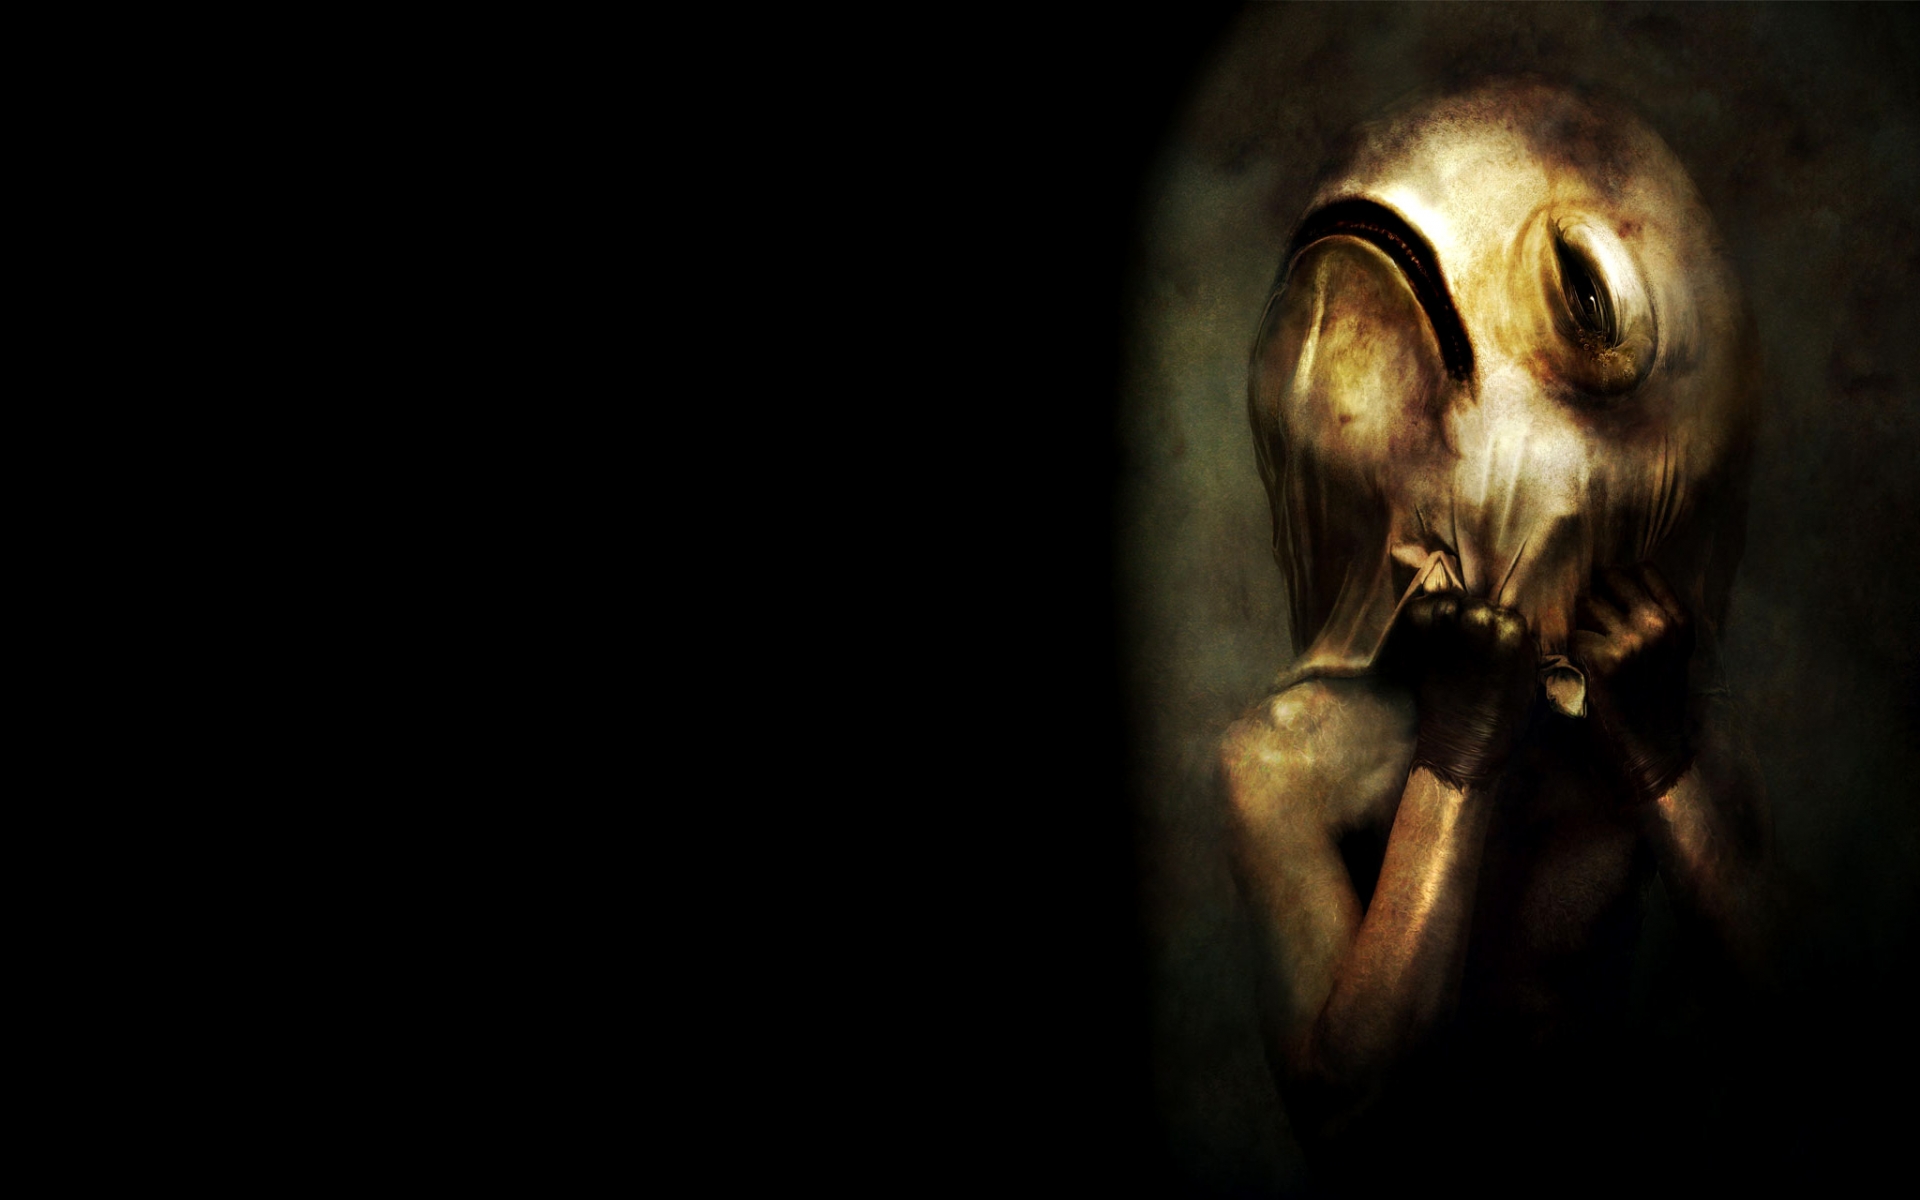 Dark Horror Scary Dream Creepy Spooky Mask Macabre Art Artistic